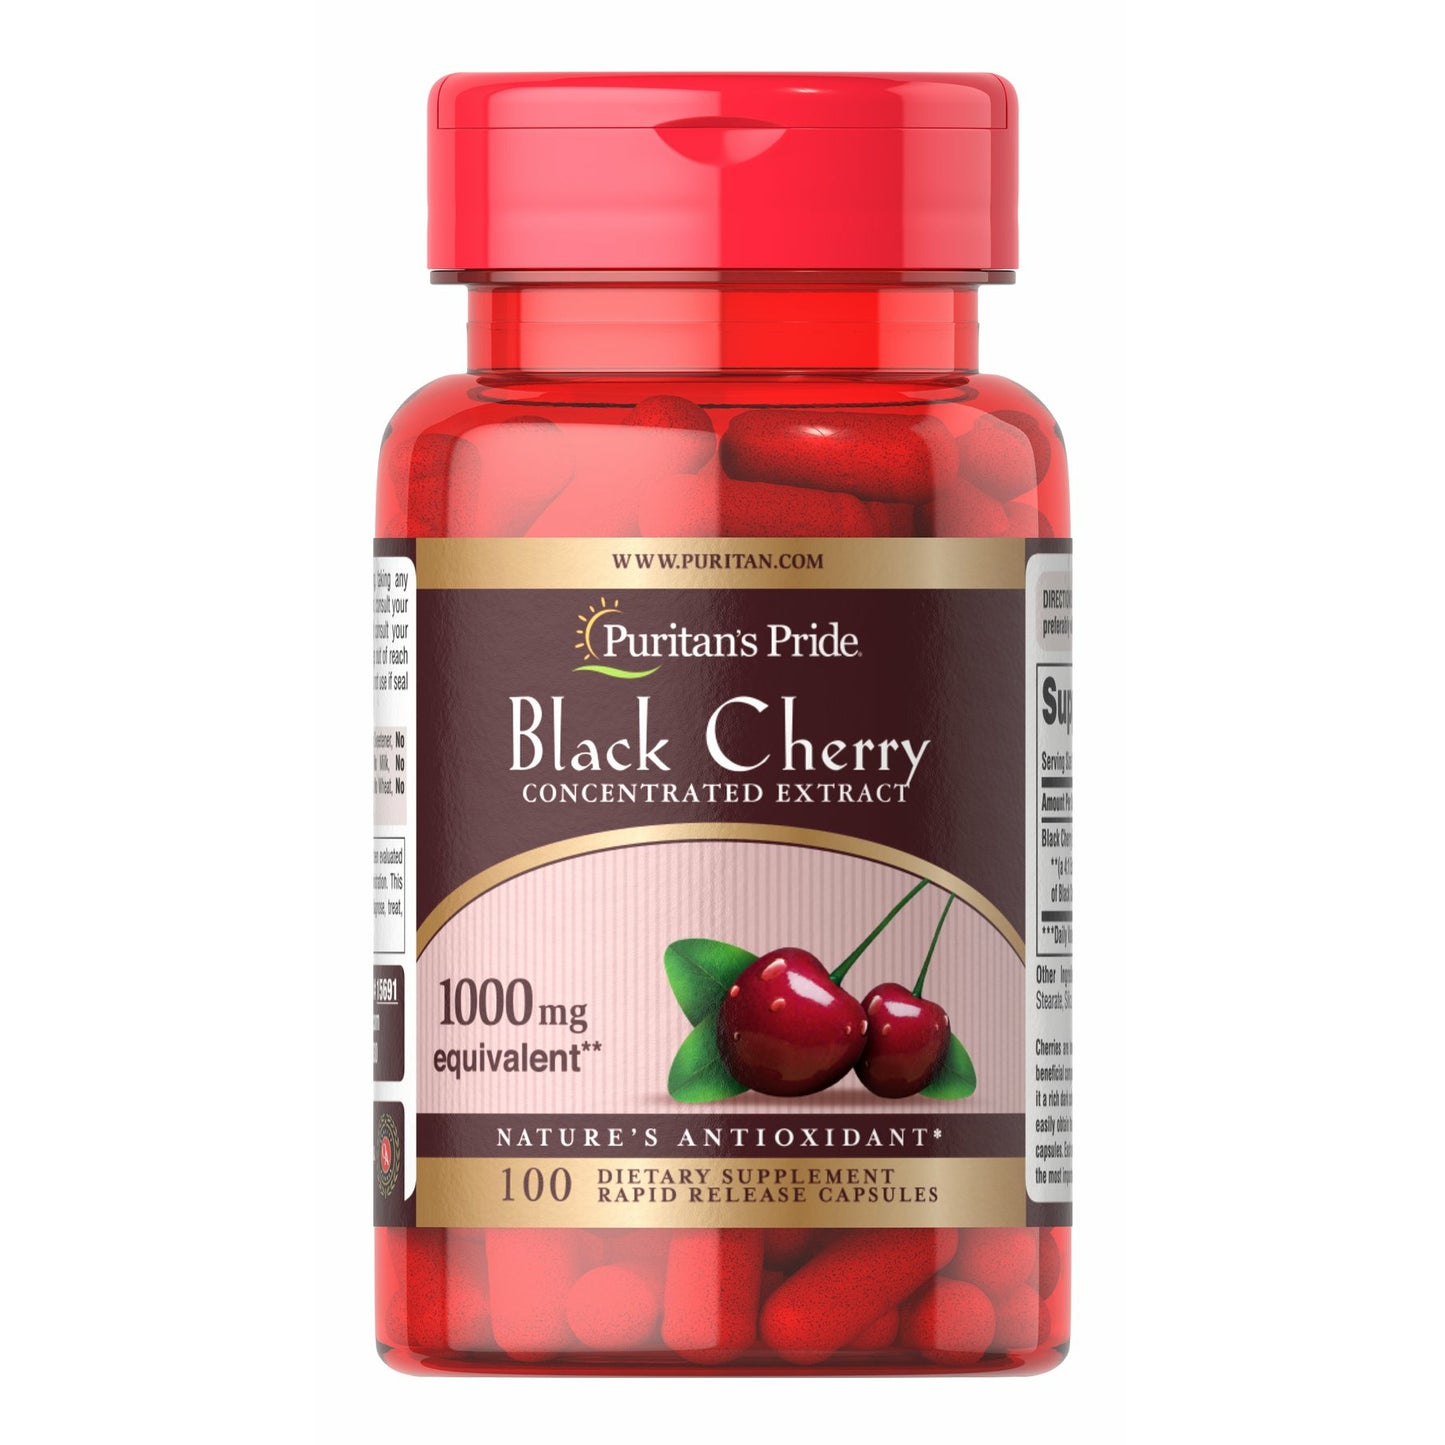 Black Cherry Extract 1000 mg Equivalent** 100 capsules